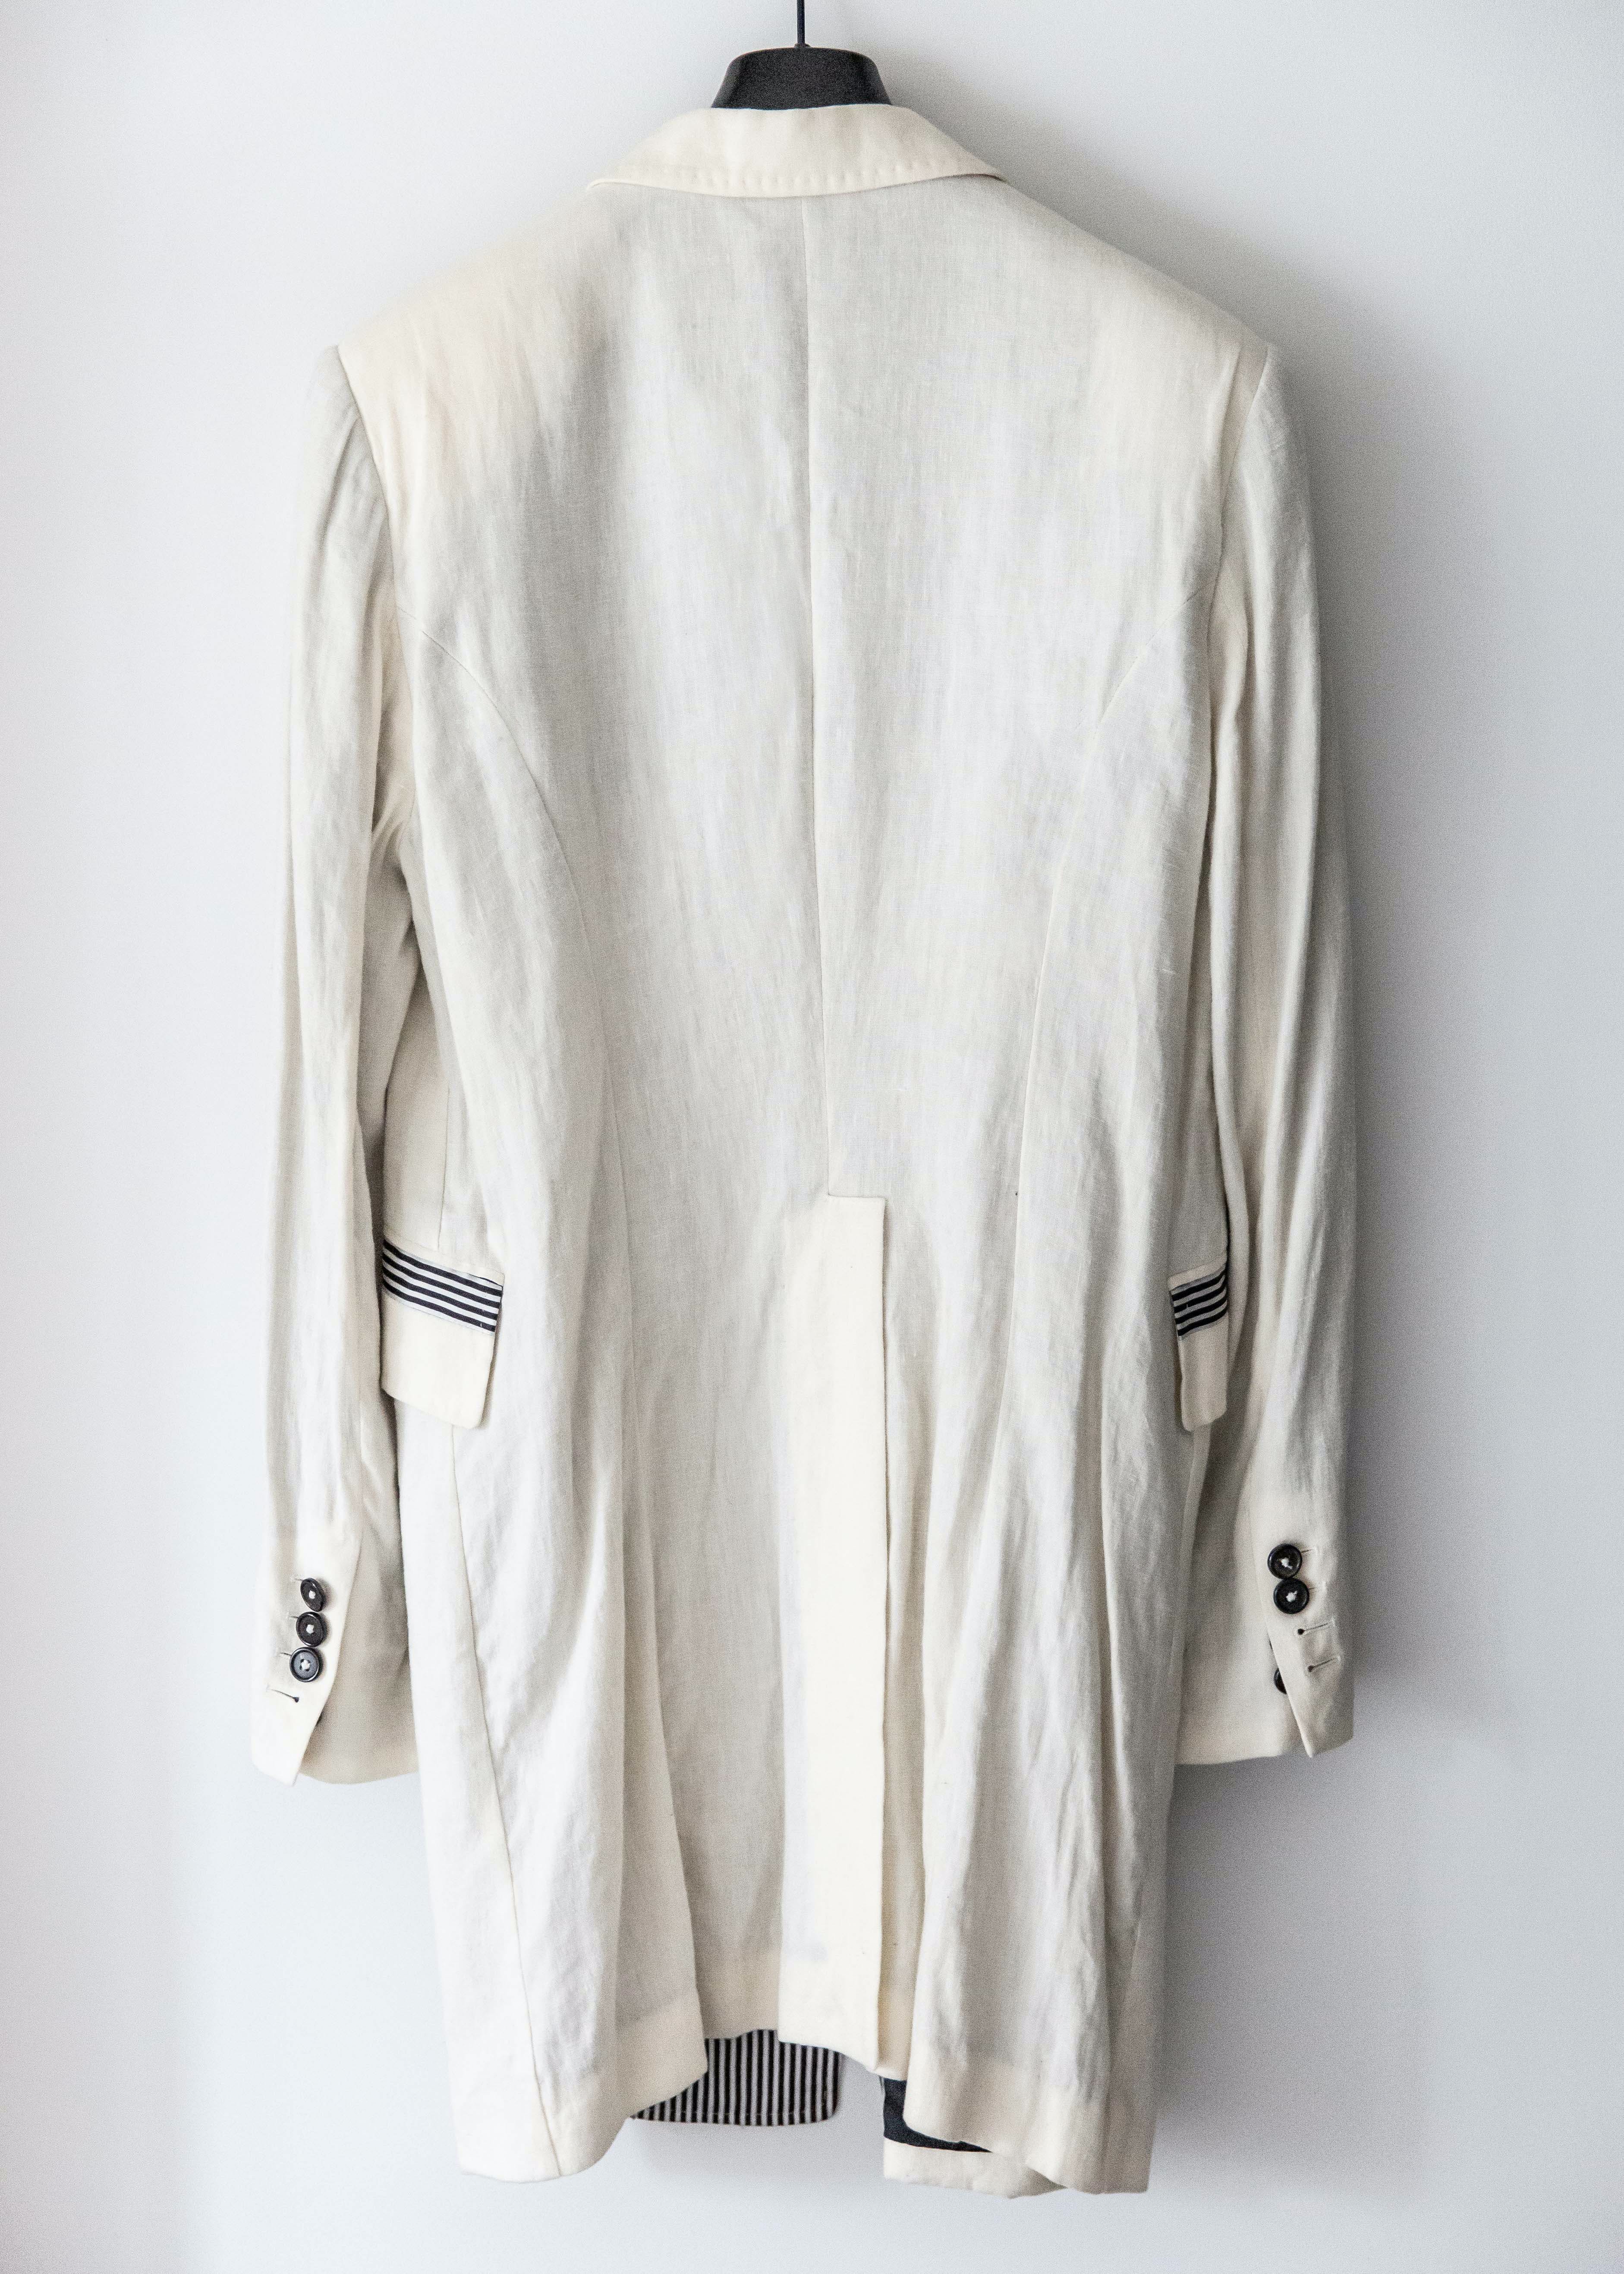 S/S08 Wool/Silk Striped Detail Coat - 2